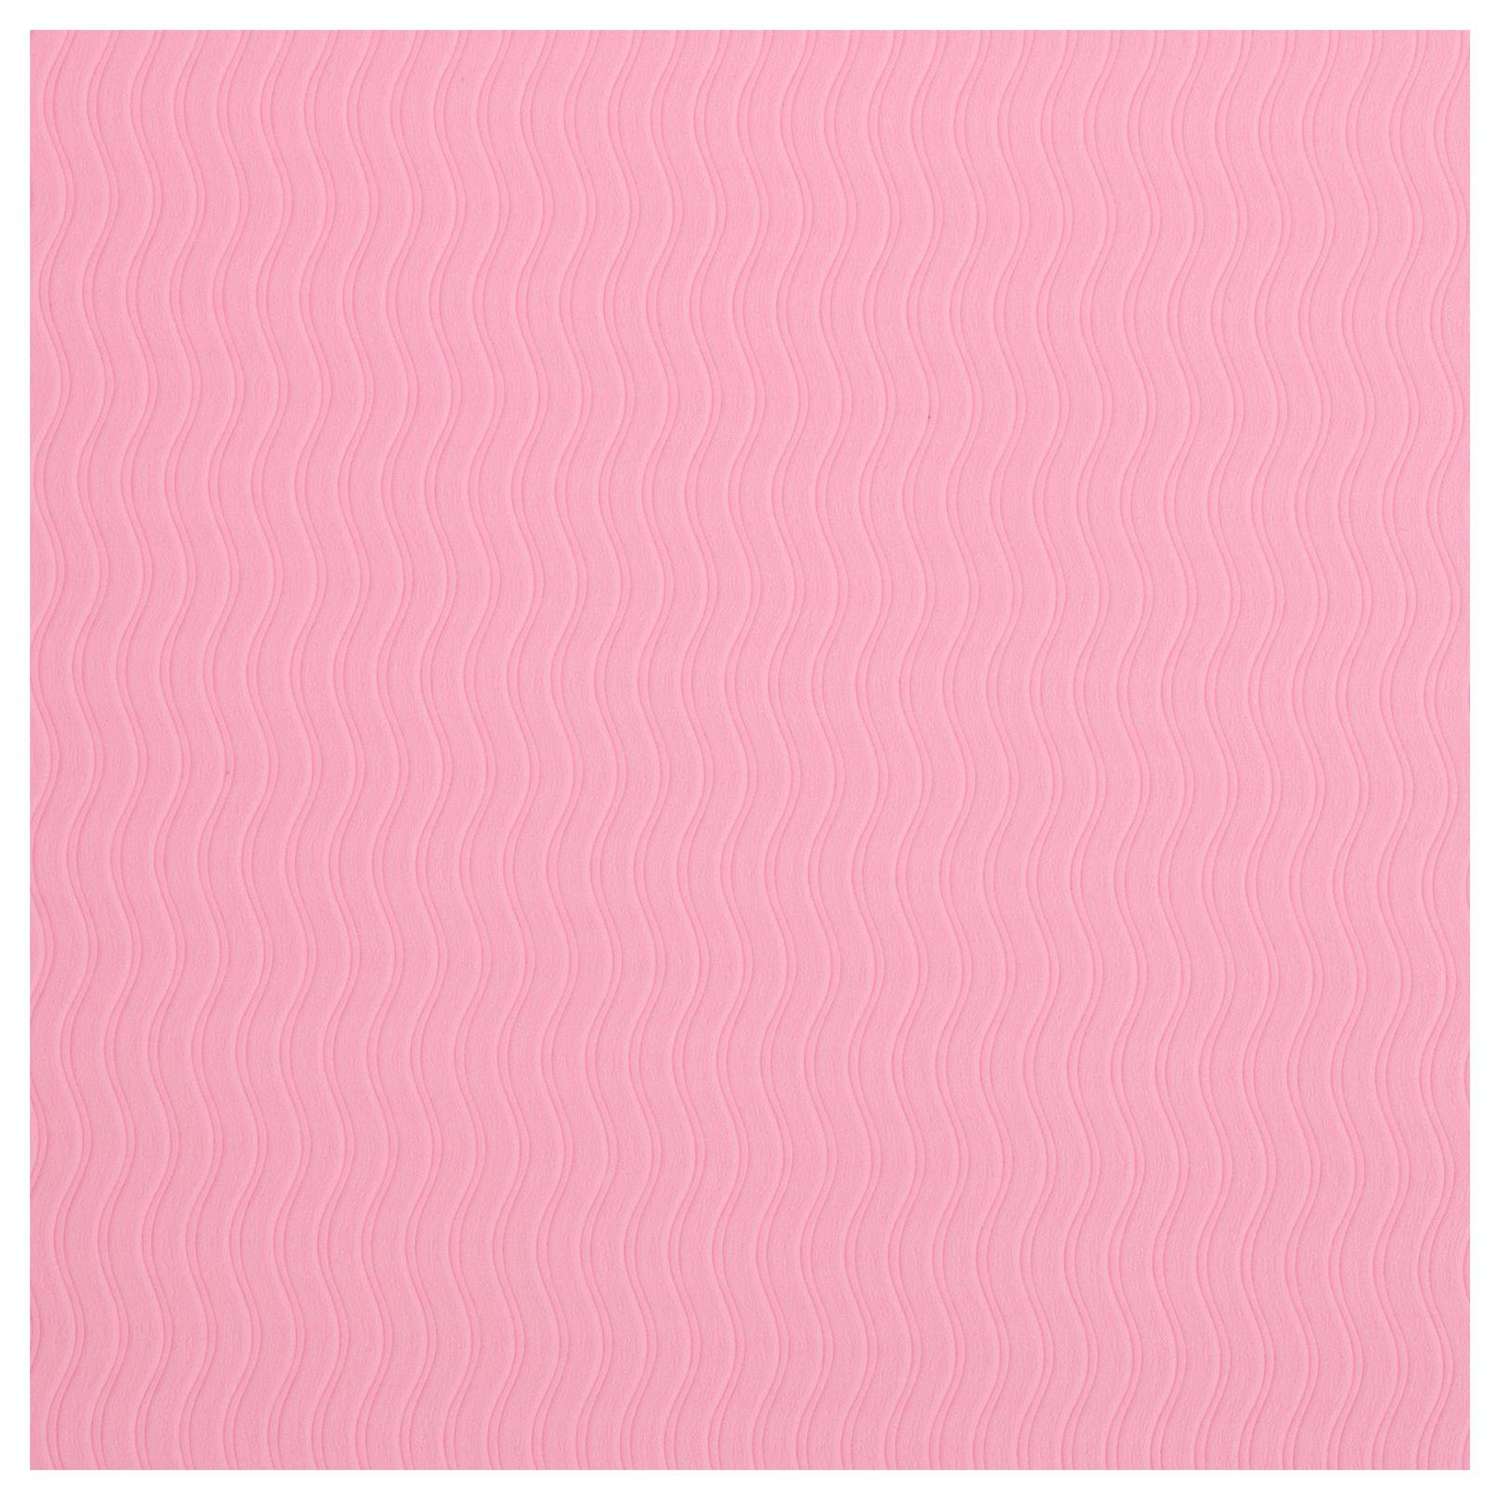 Коврик Sangh 183 х 61 х 0.6 см. двухцветный. цвет розовый - фото 6